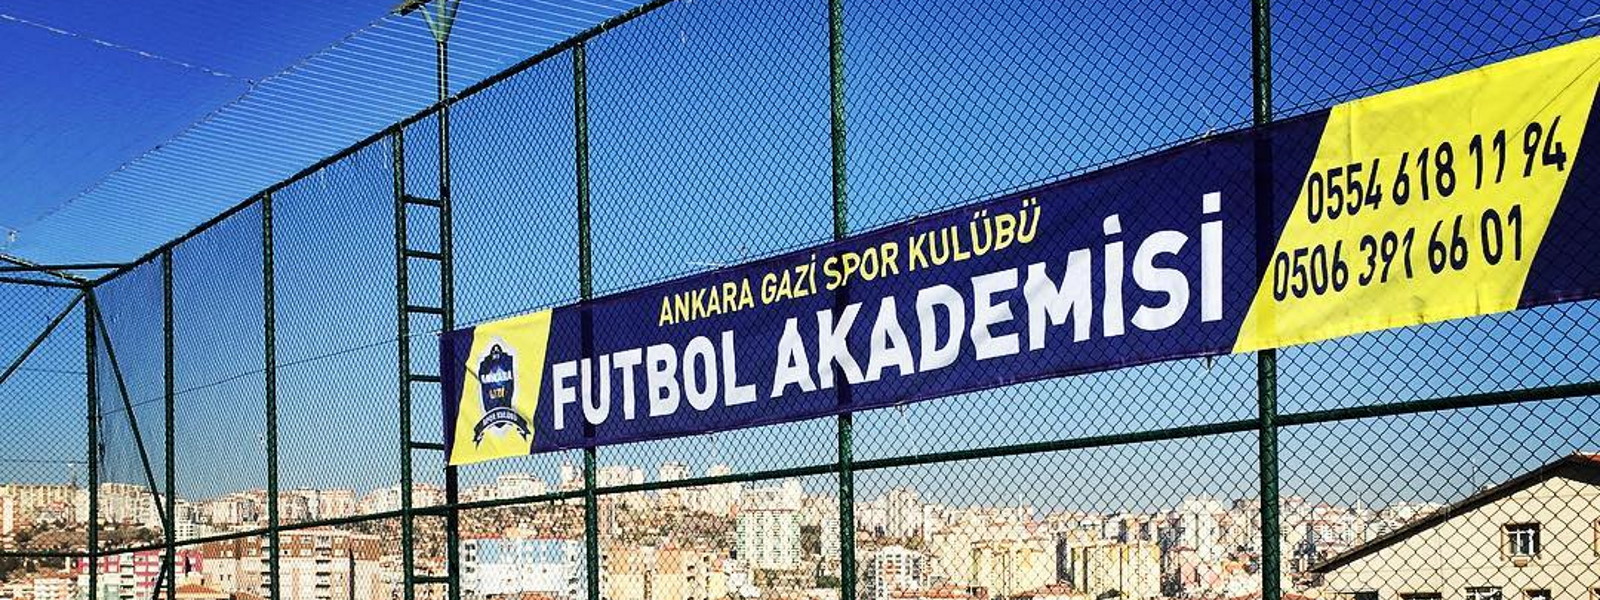 Ankara Gazi Spor Kulübü